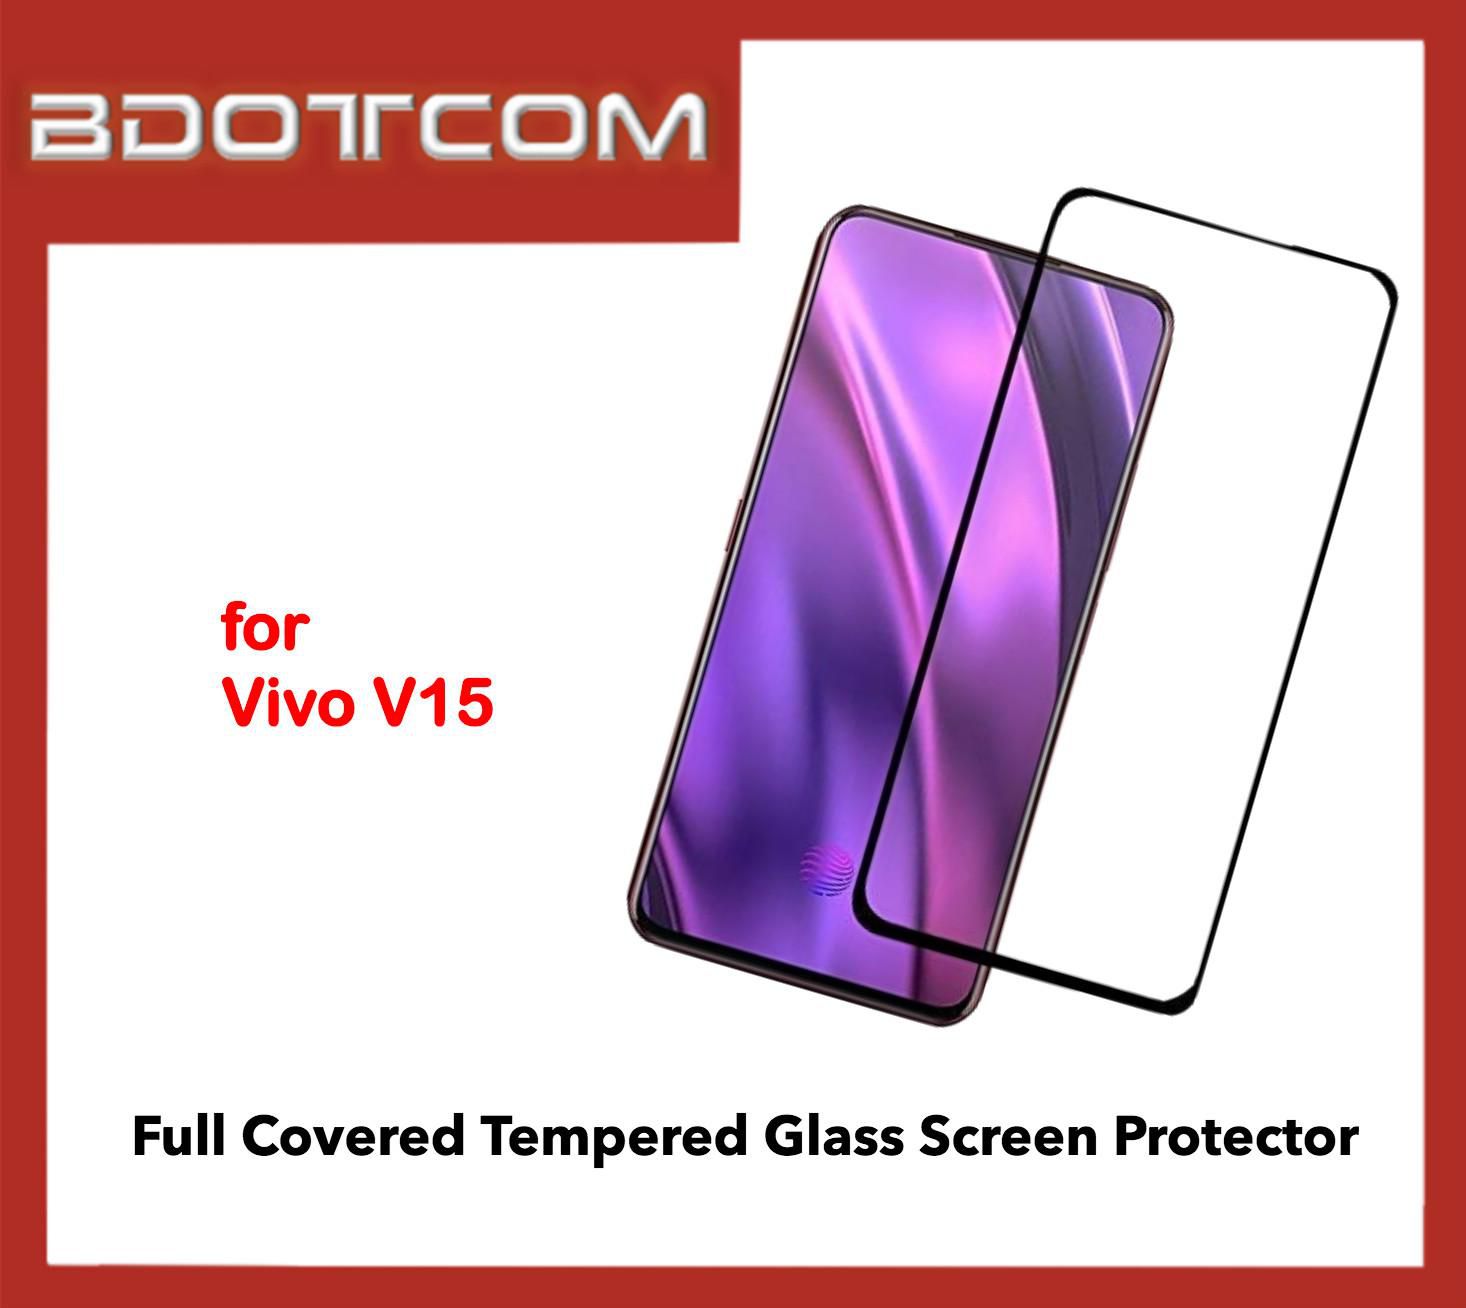 Bdotcom Full Covered Tempered Glass Screen Protector for Vivo V15 (Black)